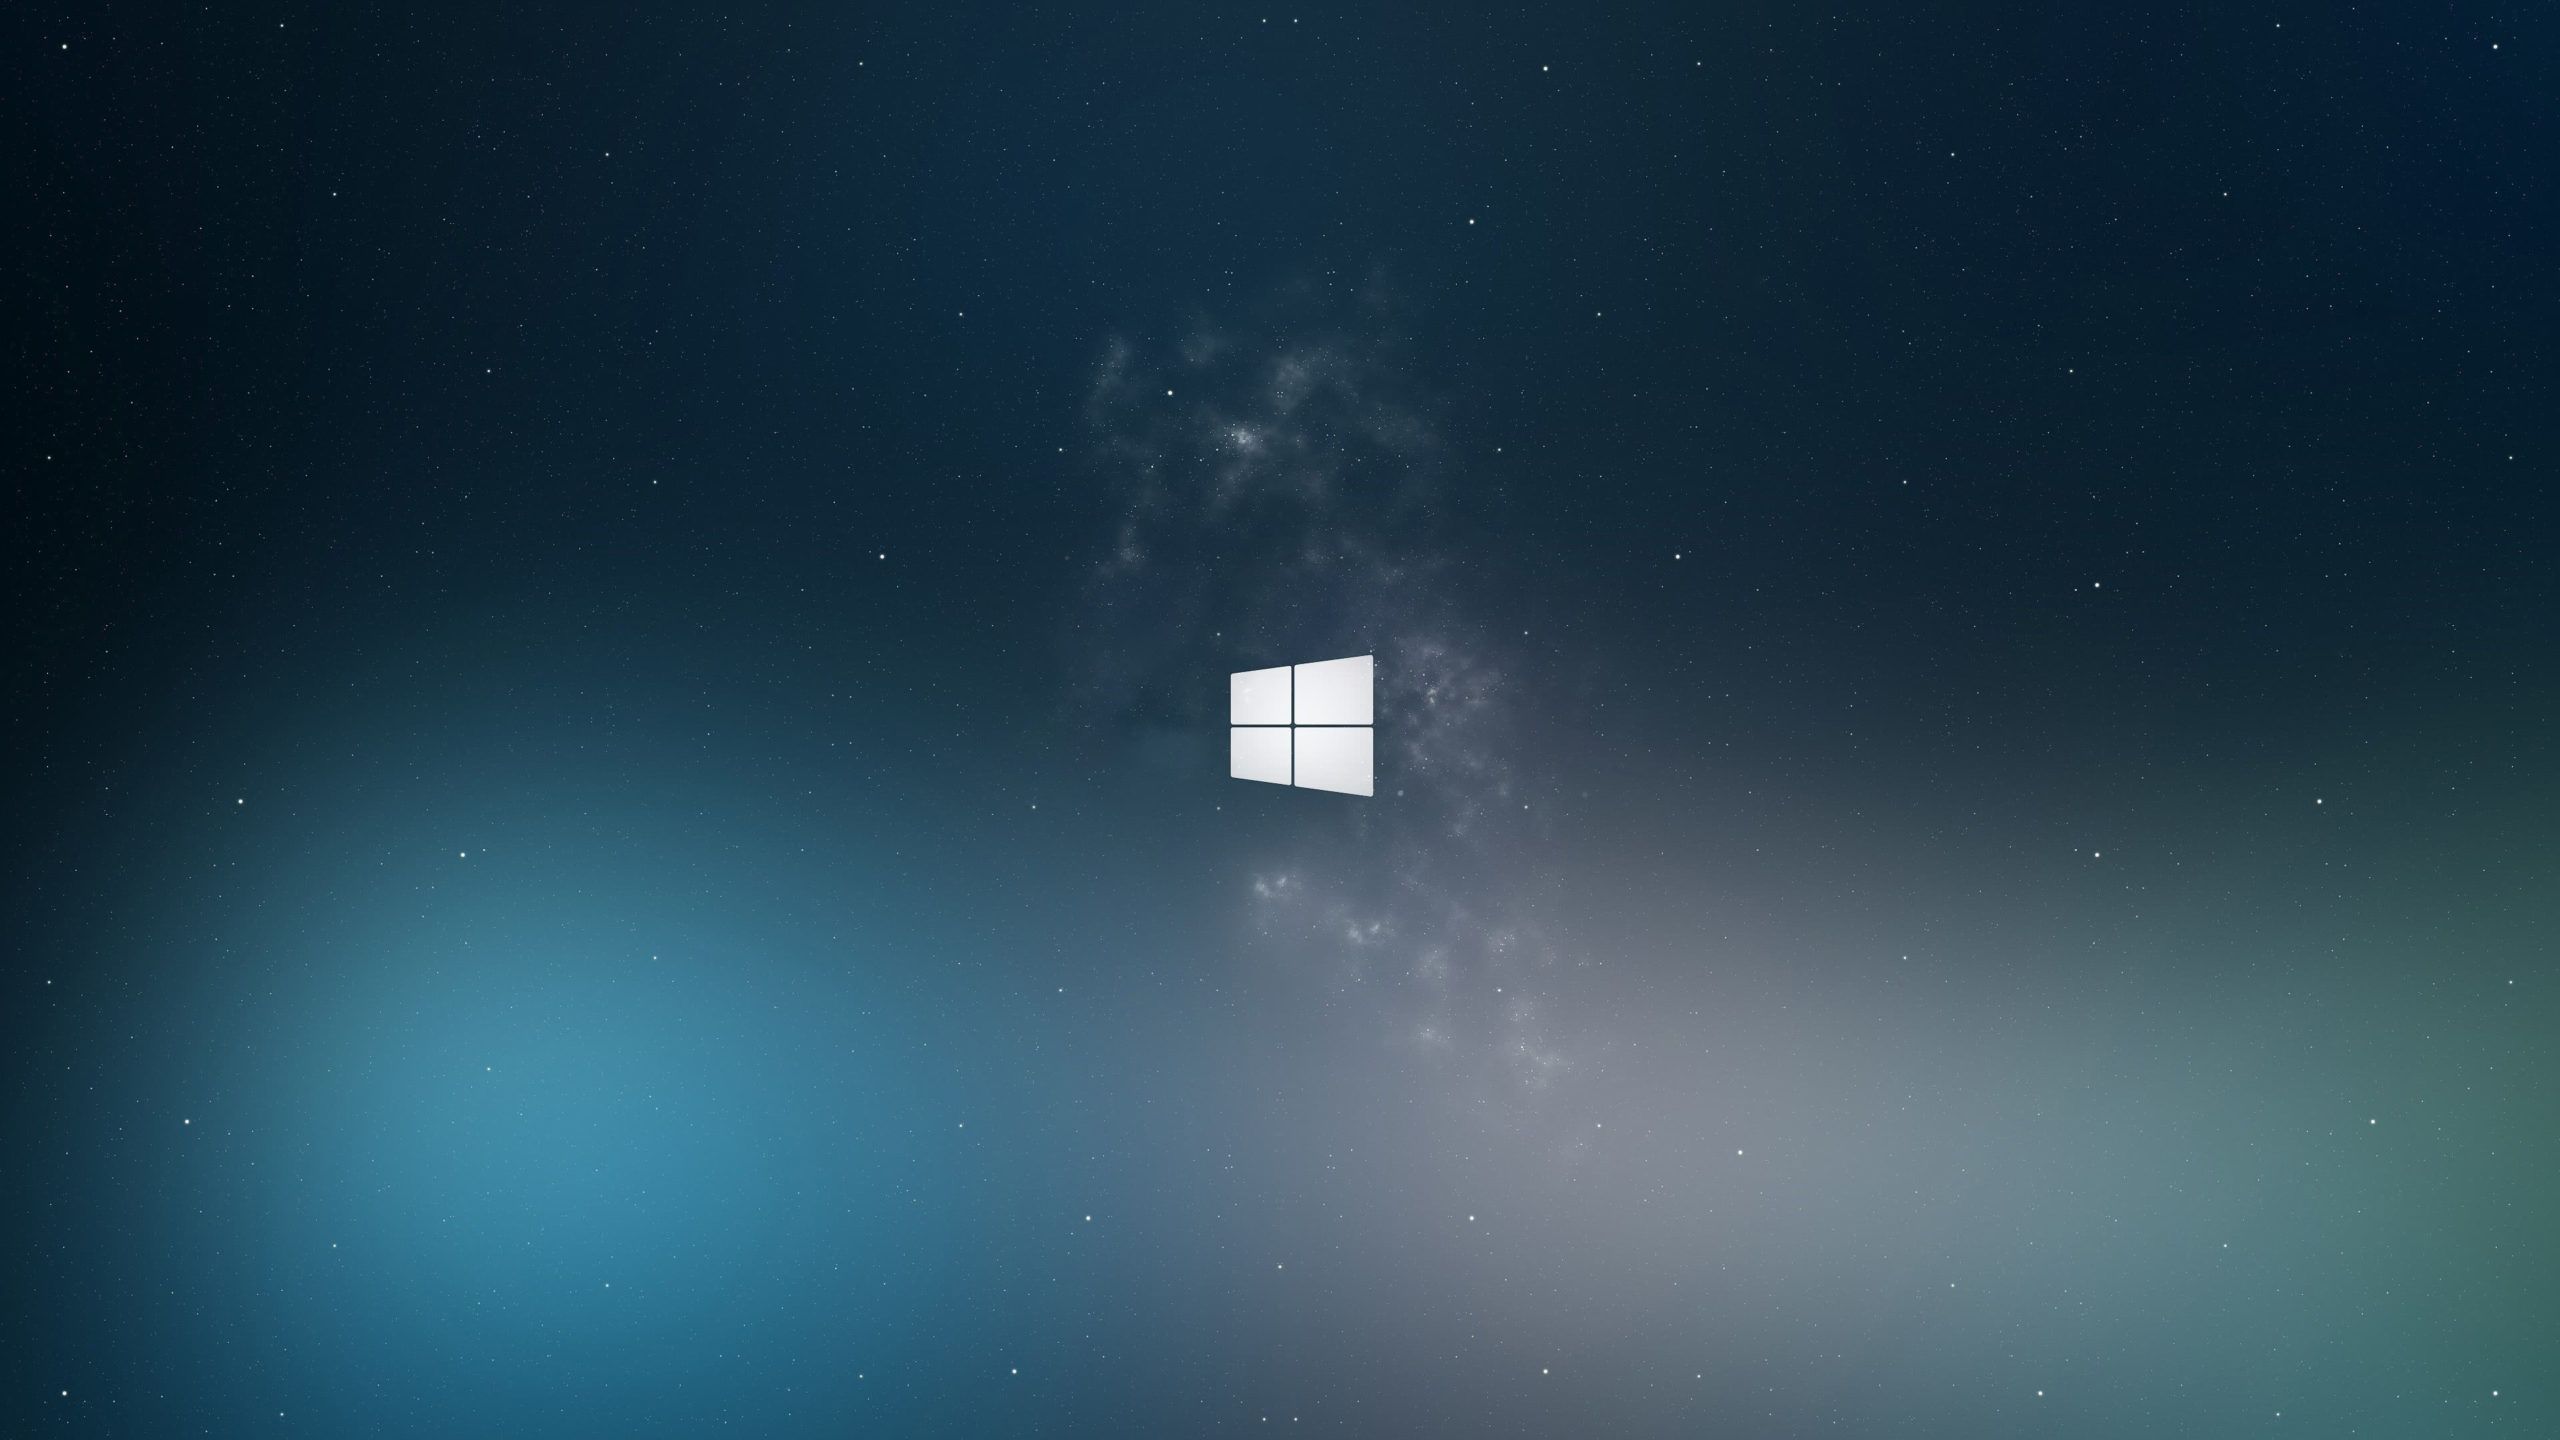  Windows Hintergrundbild 2560x1440. Windows 10 Uhd 4k Wallpaper